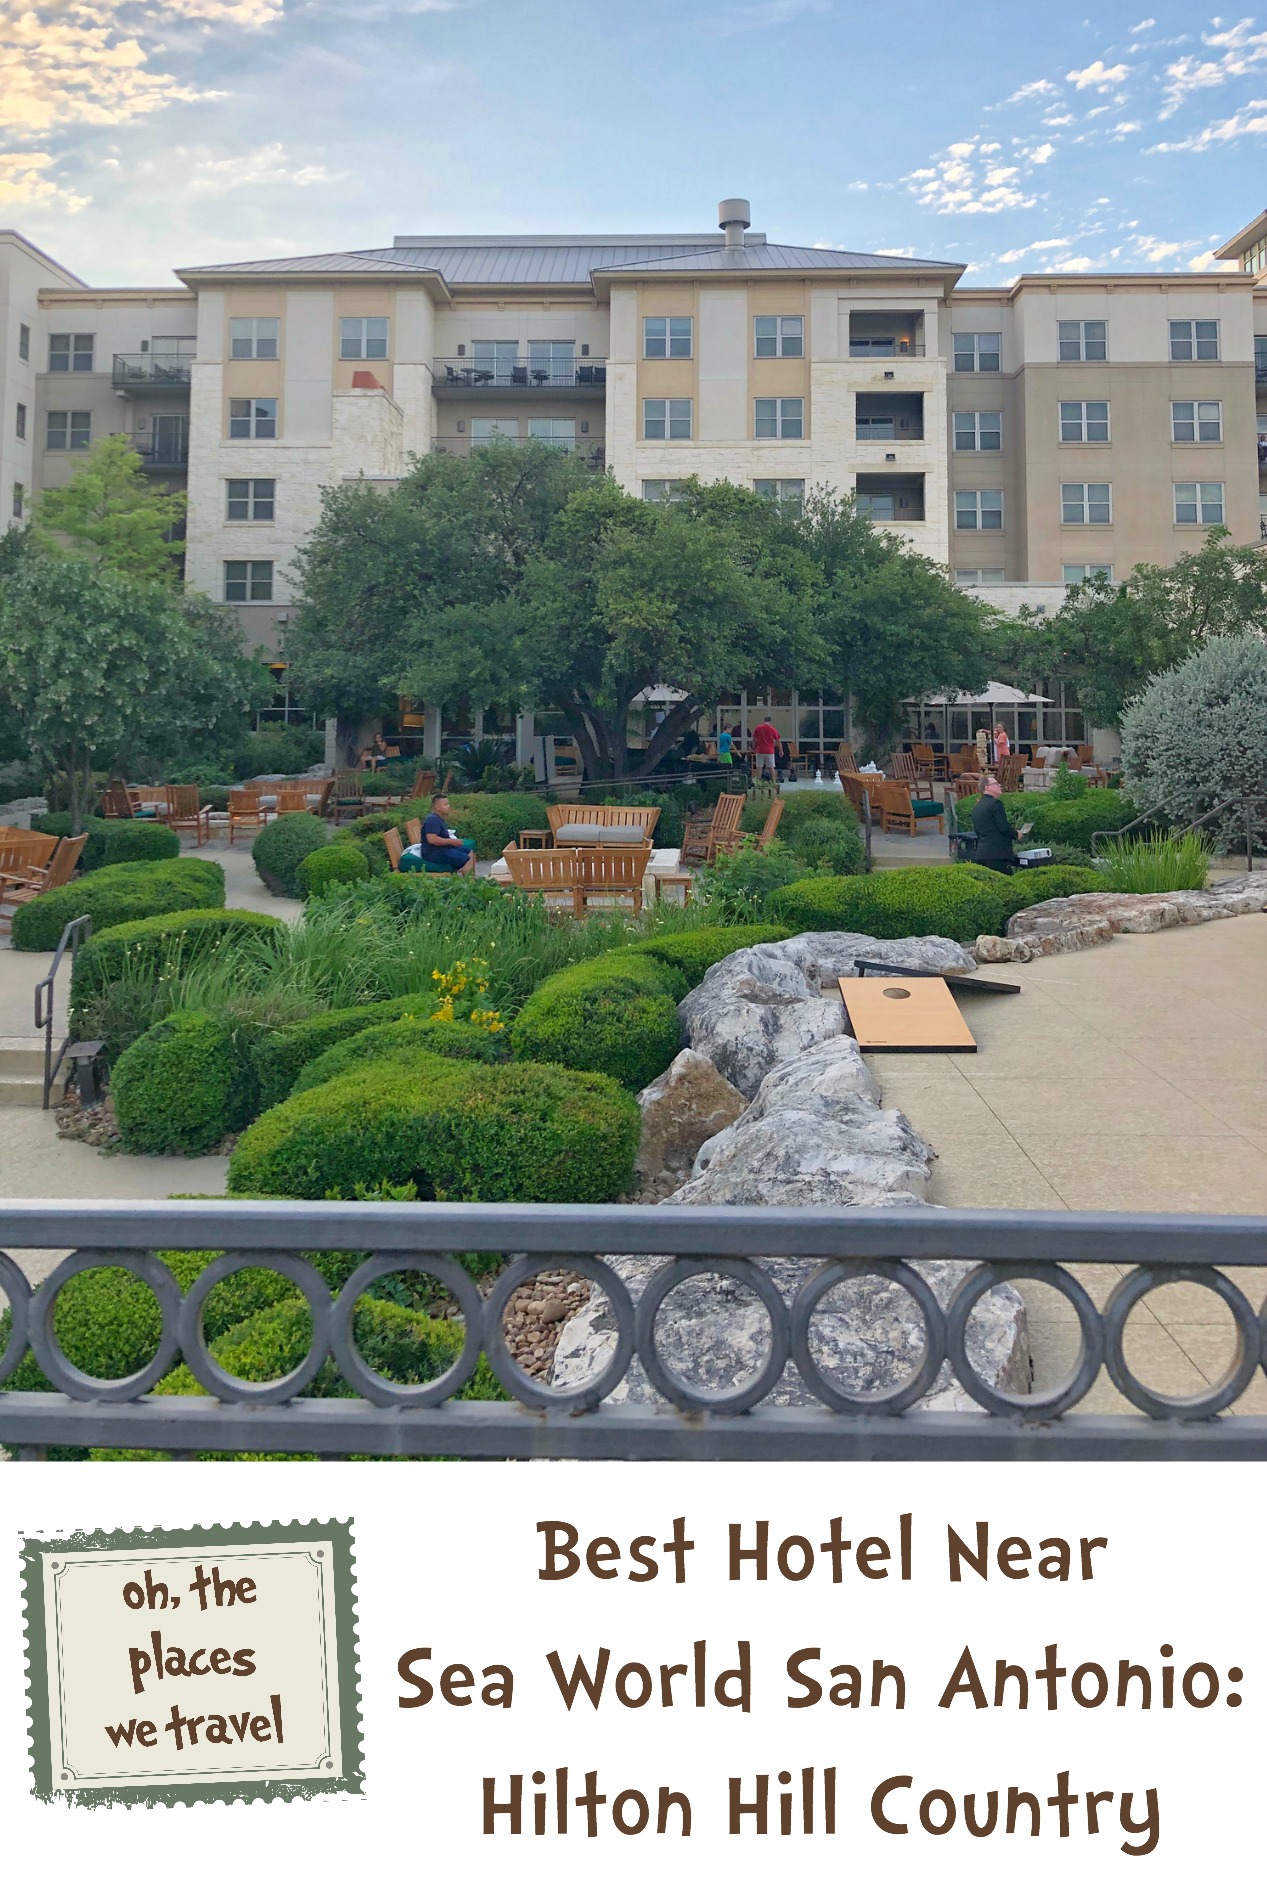 Best Hotel Near Sea World San Antonio